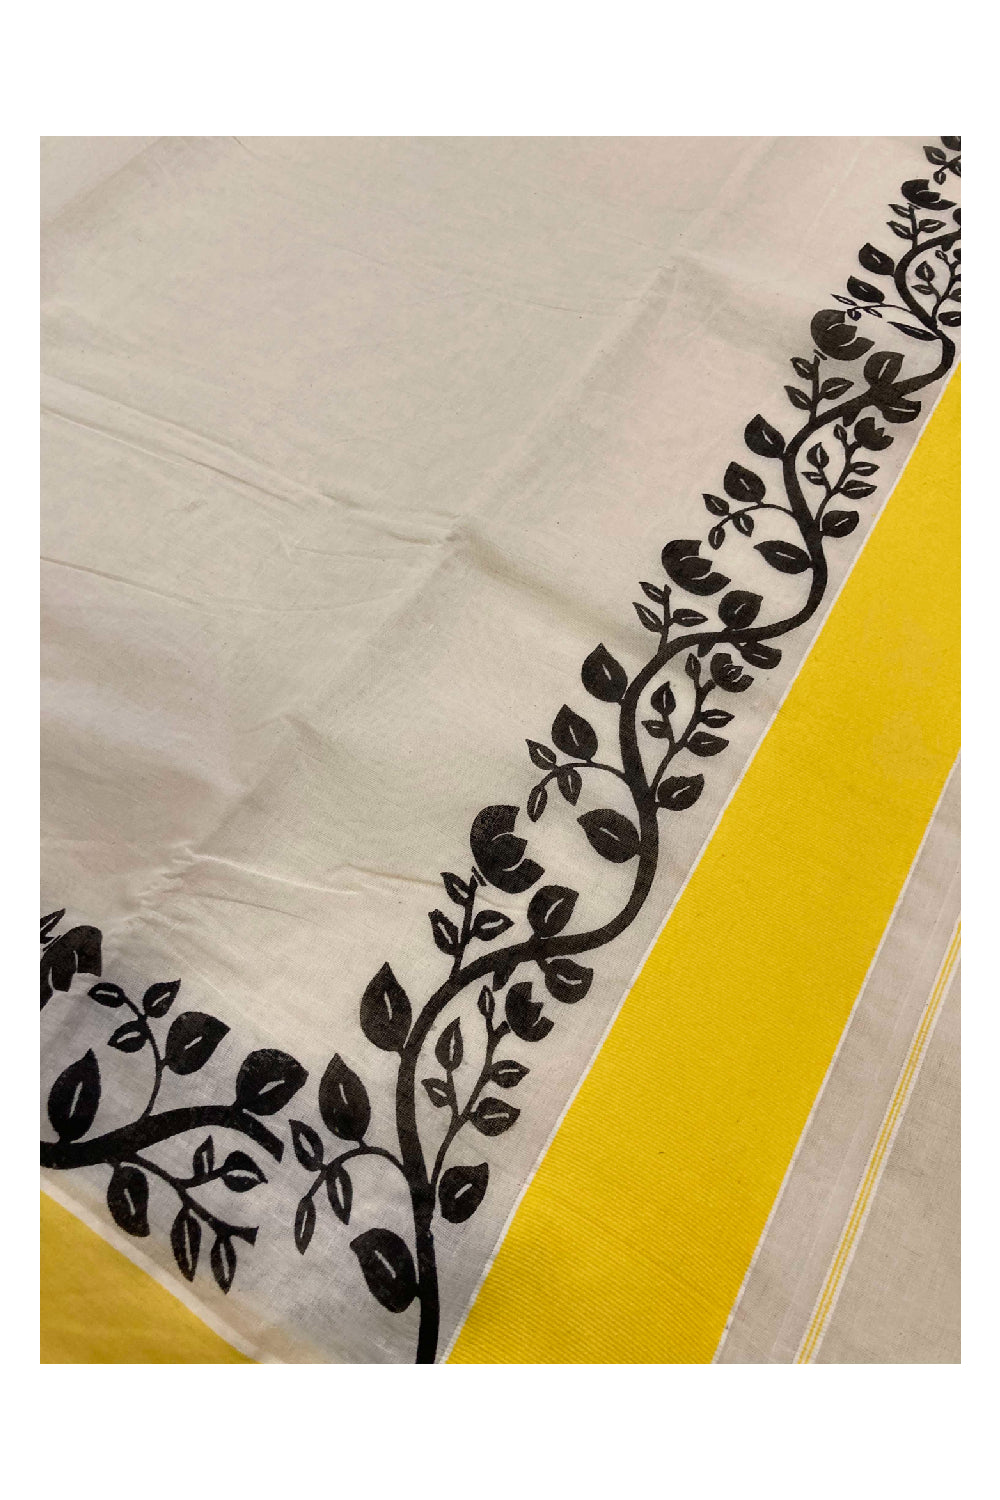 Southloom Original Design Kerala Saree with Black Floral Vines Block Print on Yellow Border